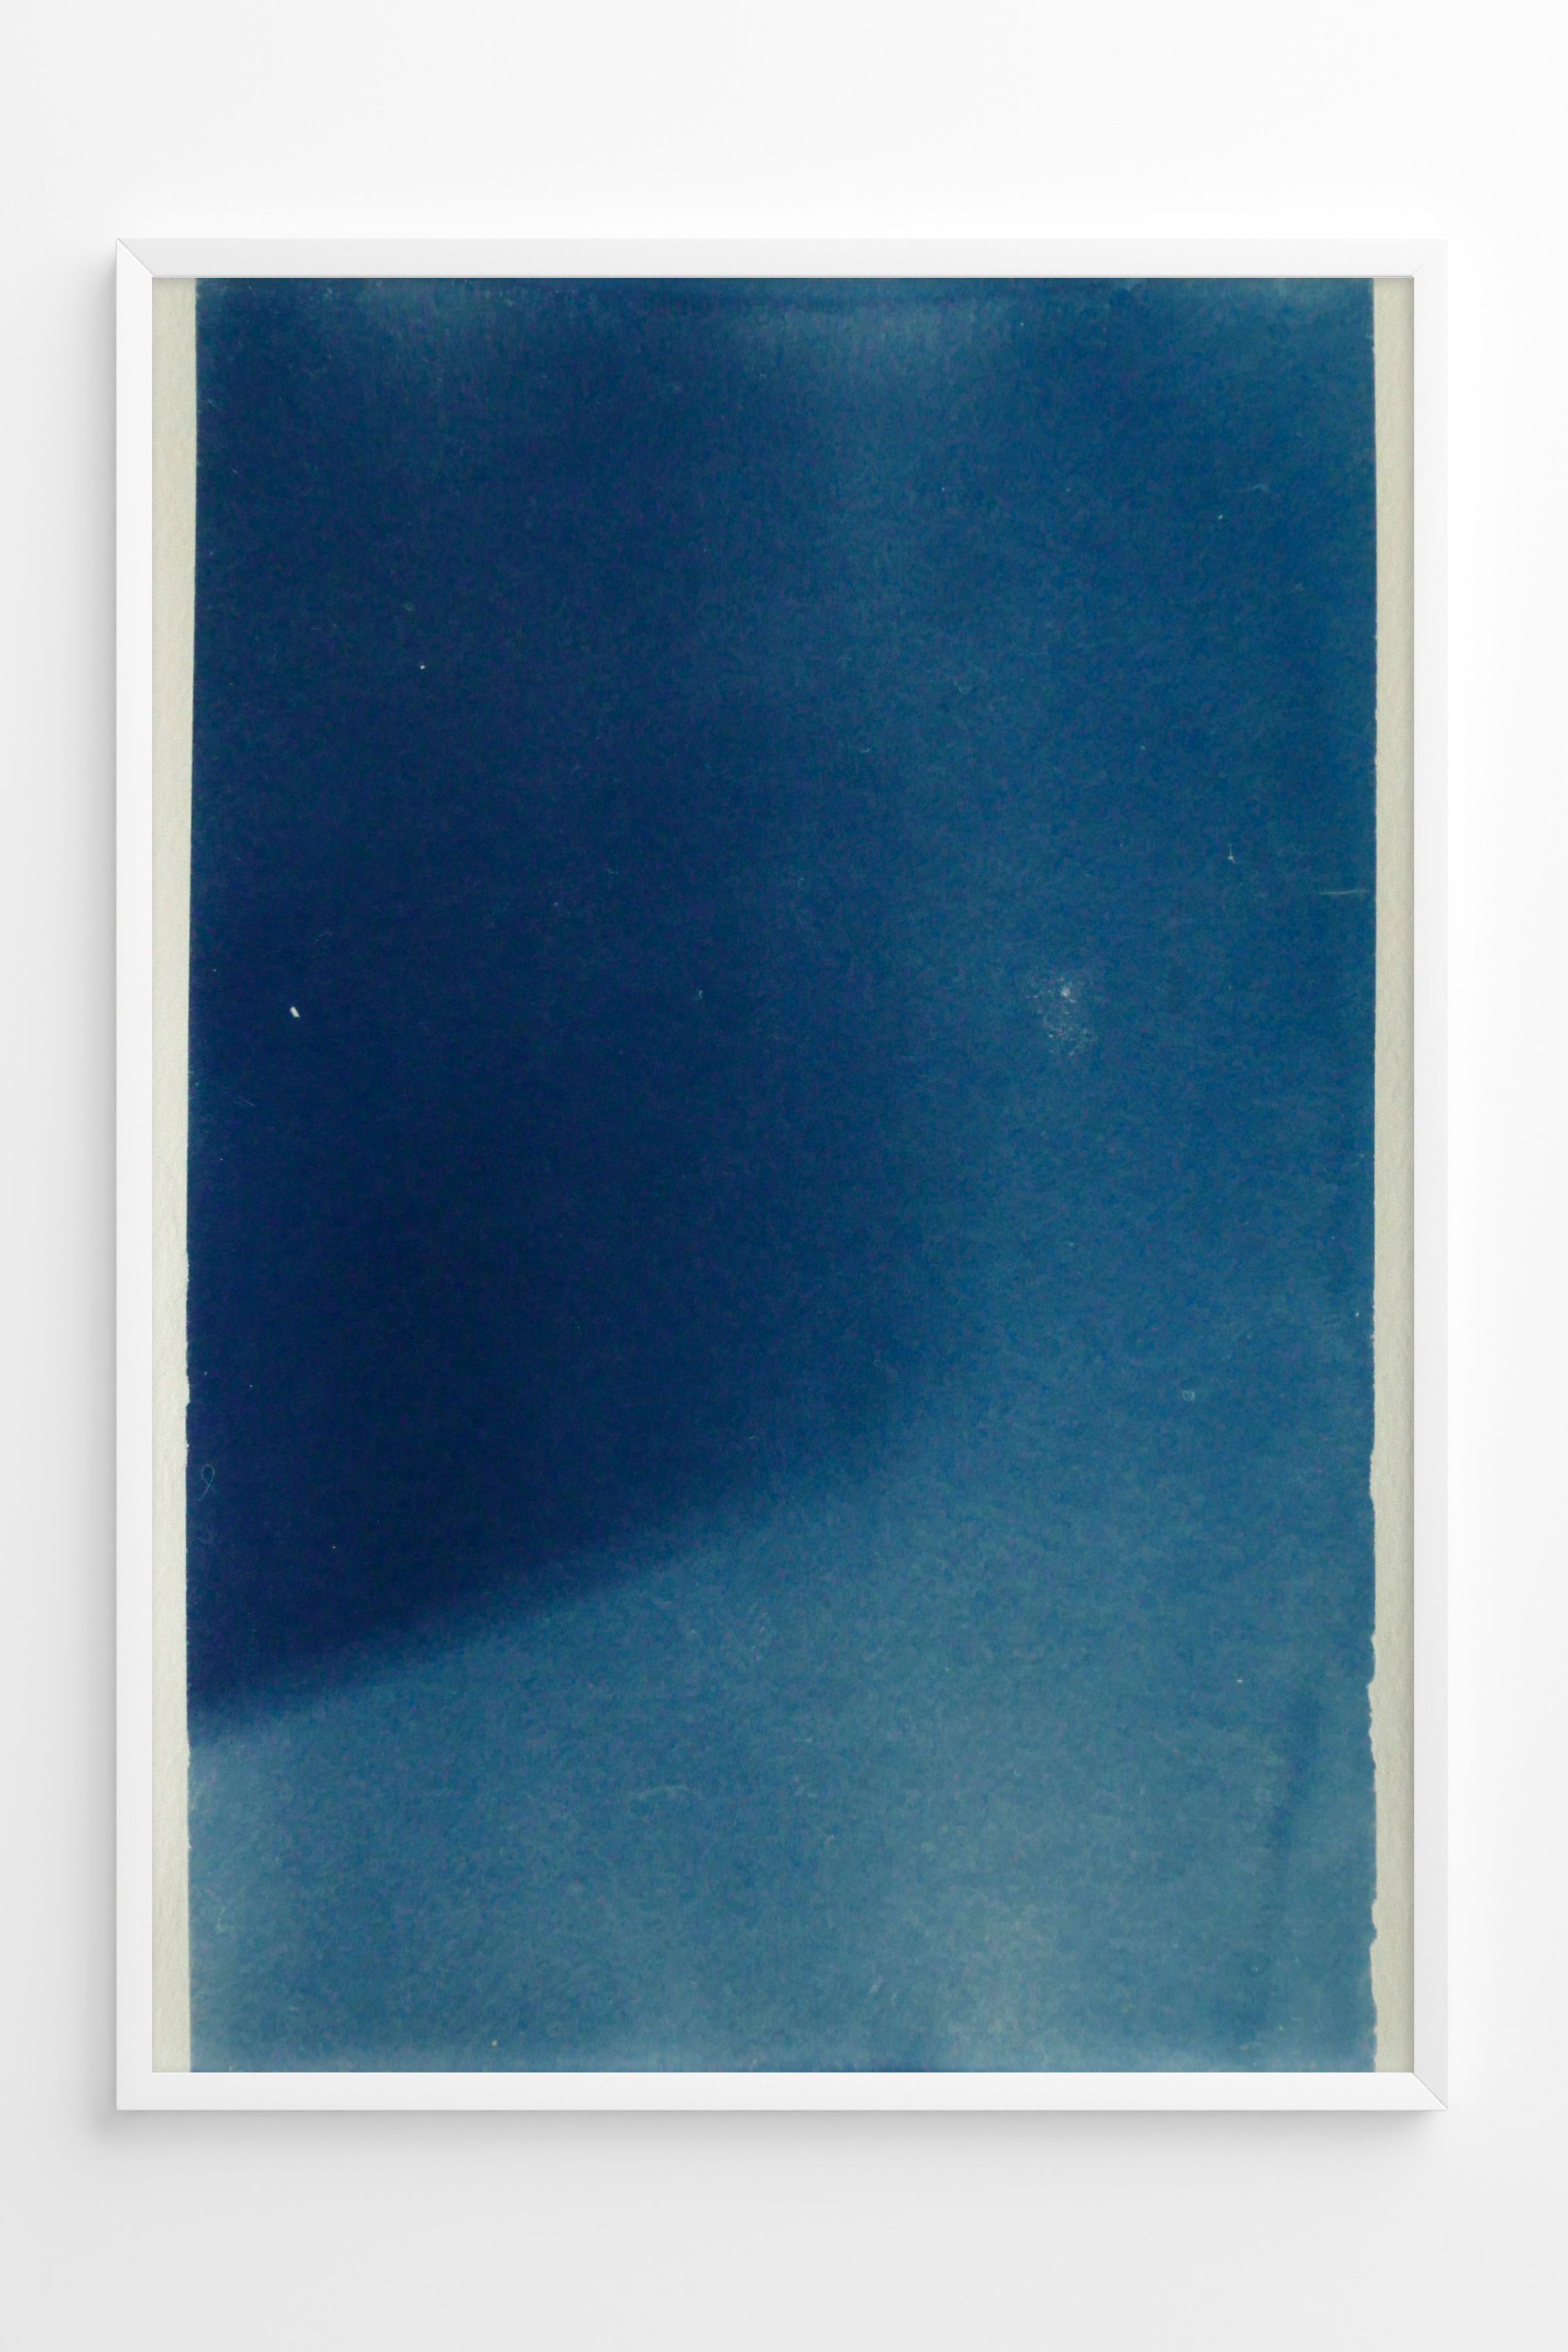 Durational cyanotype exposure of sunbeams through the window.